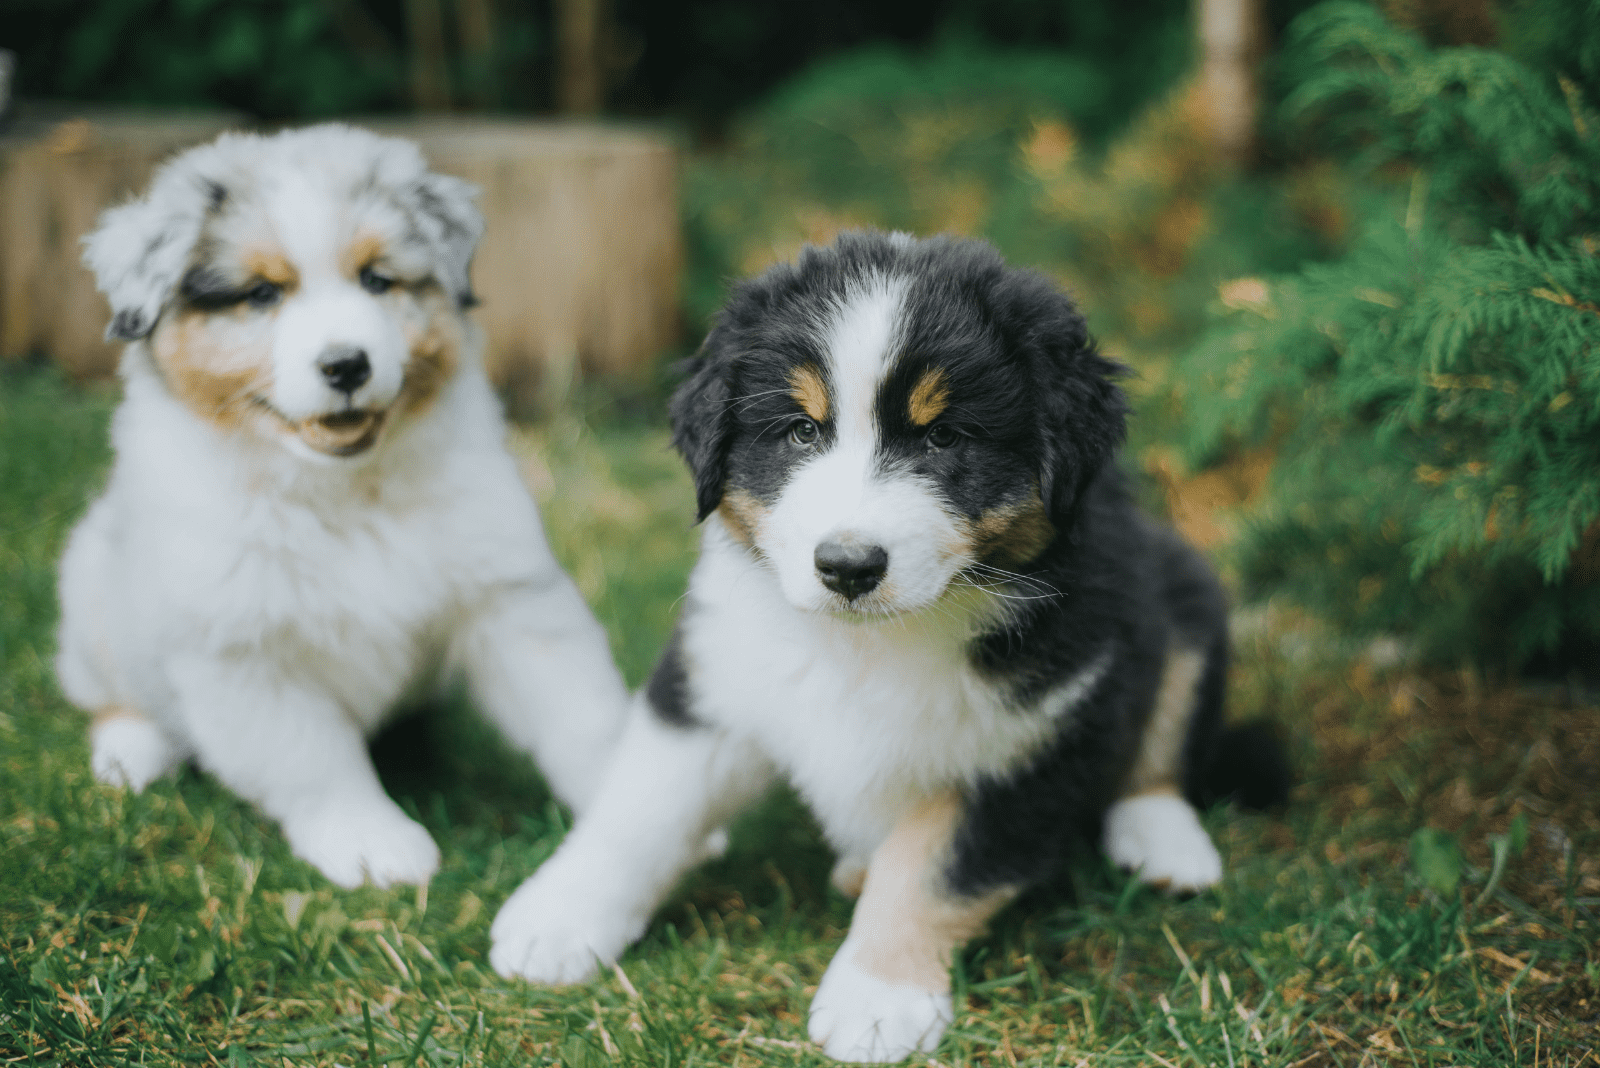 two adorable Australian Shepherd puppies sitting on the grass